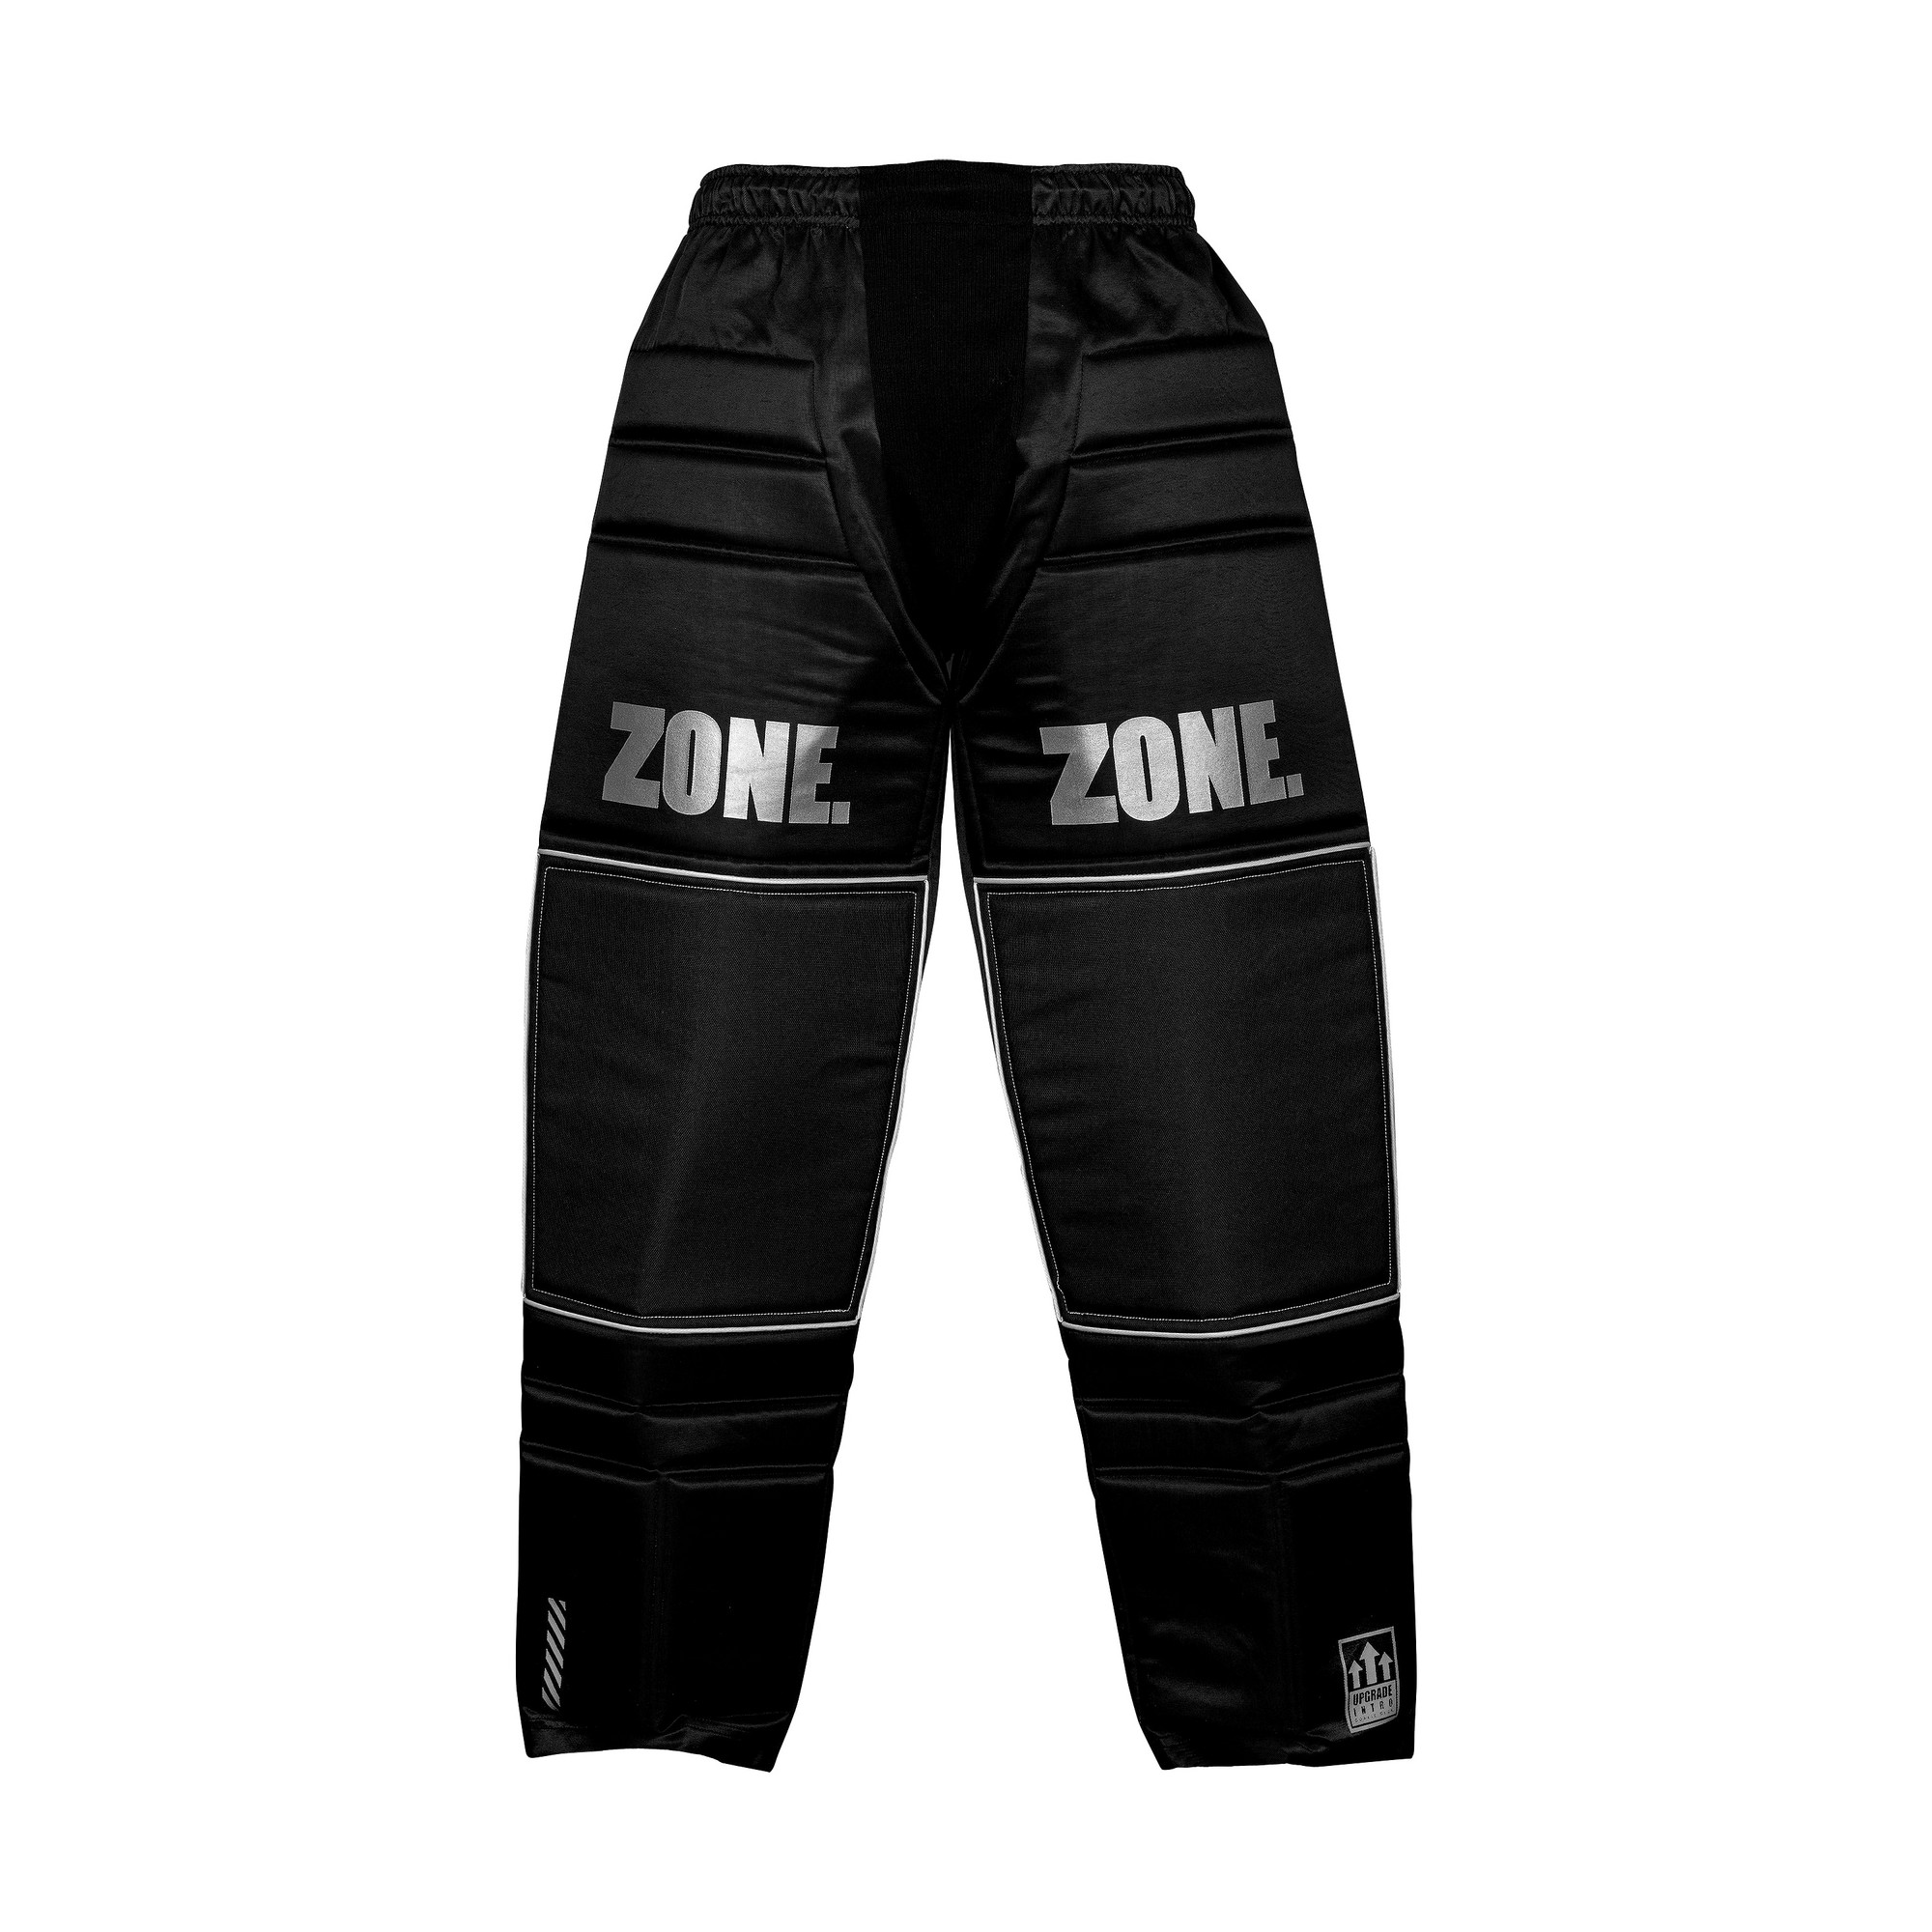 Zone floorball Goalie pants INTRO black/silver S, černá / stříbrná